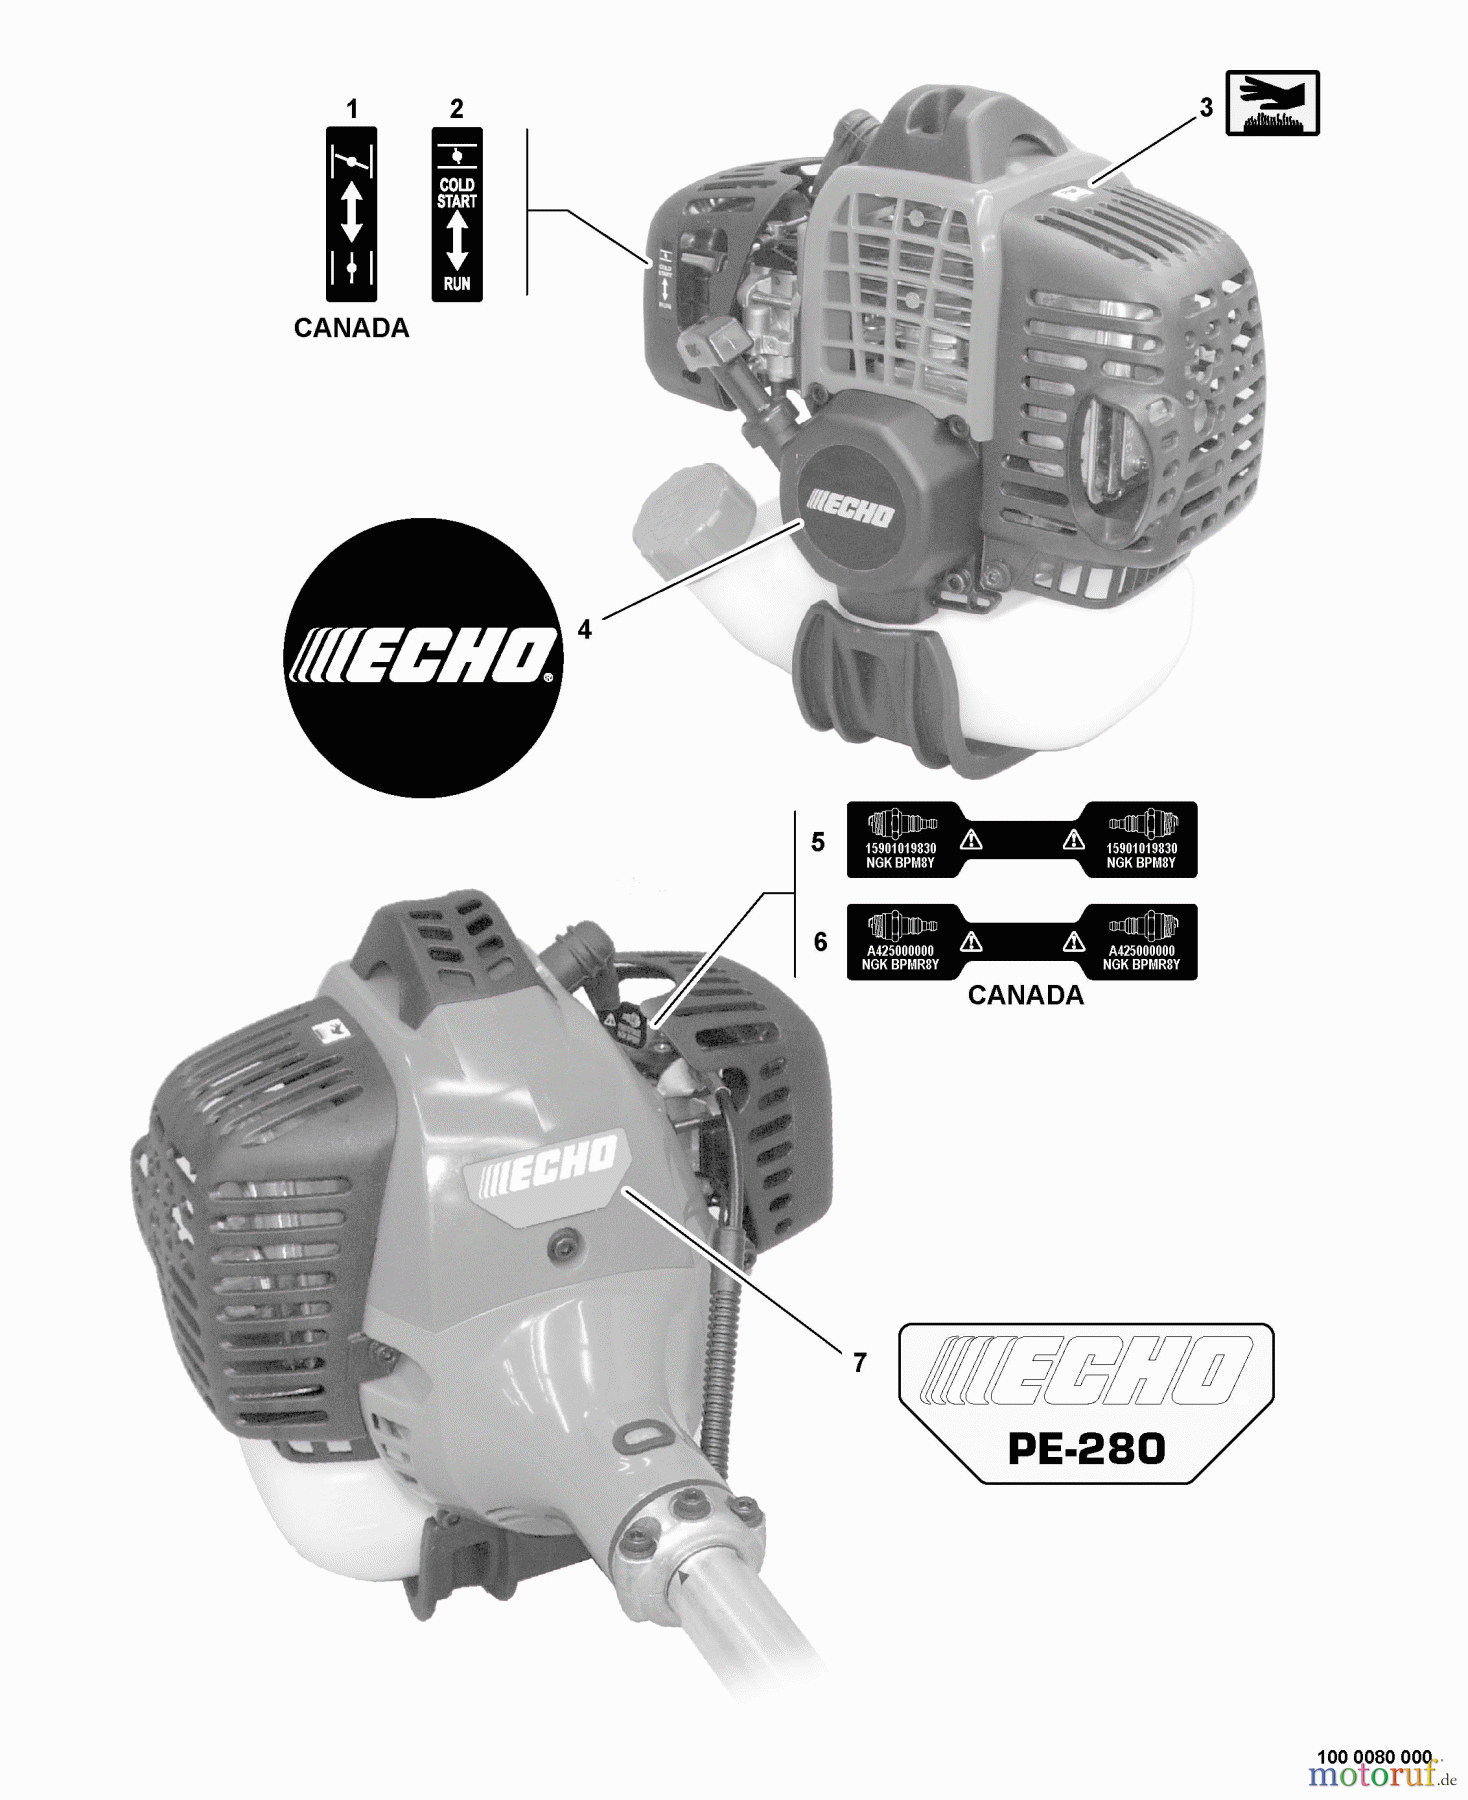  Echo Kantenschneider PE-280 - Echo Edger, S/N: S63012001001 - S63012999999 Labels